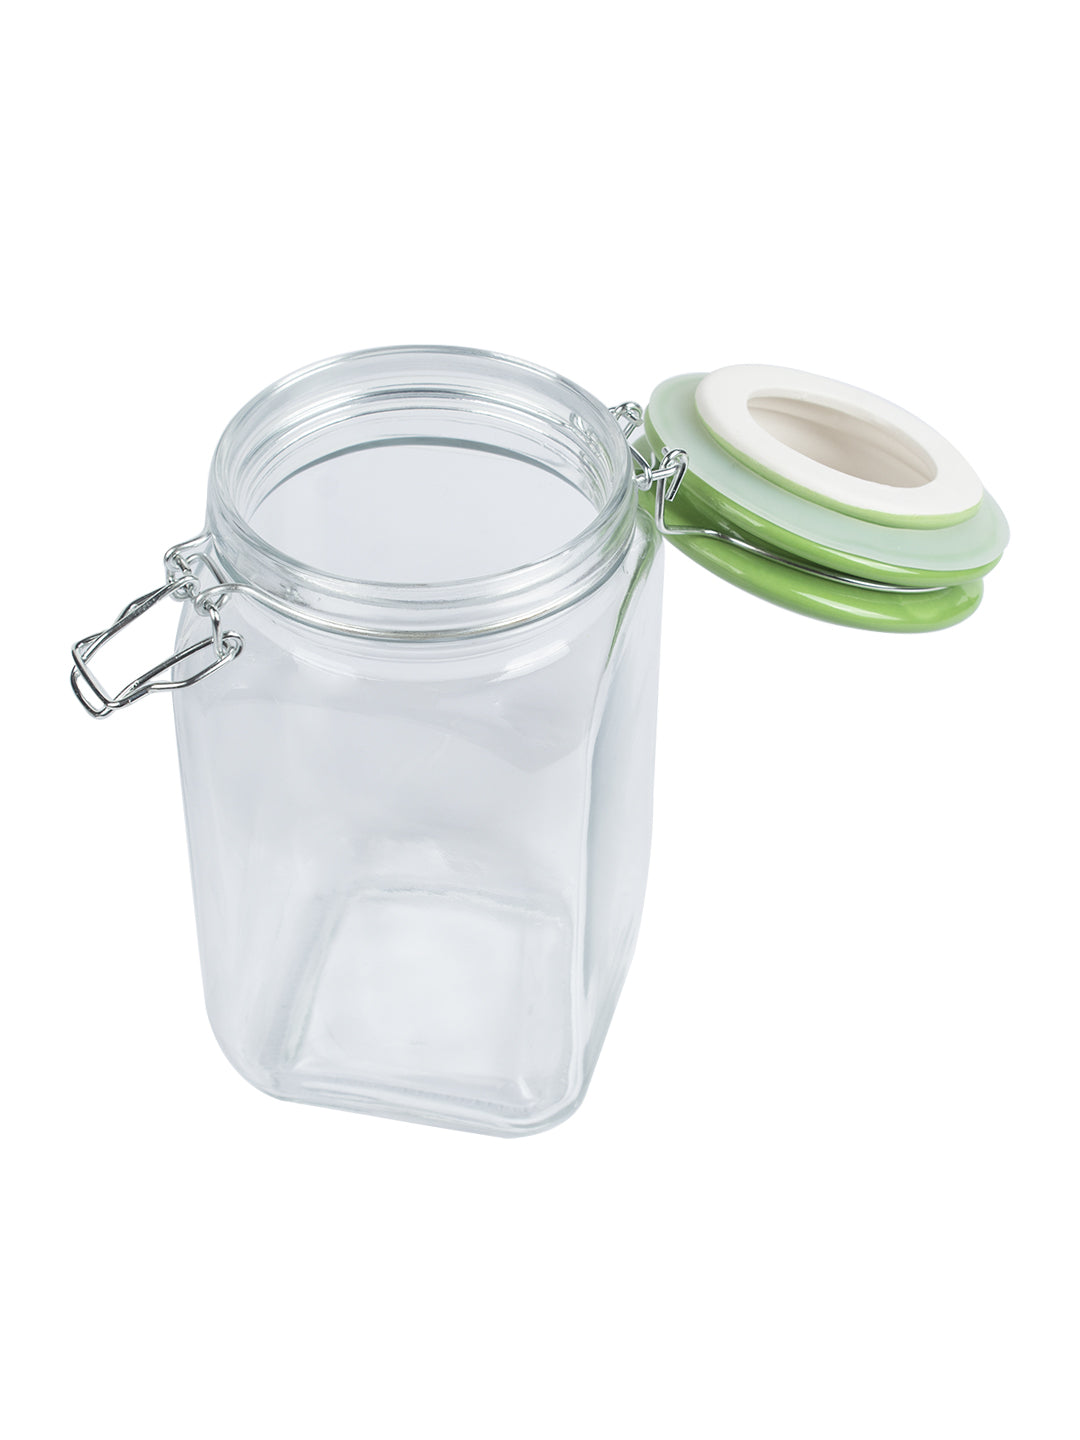 Glass Jar With Green Ceramic Lid - 1200 Ml